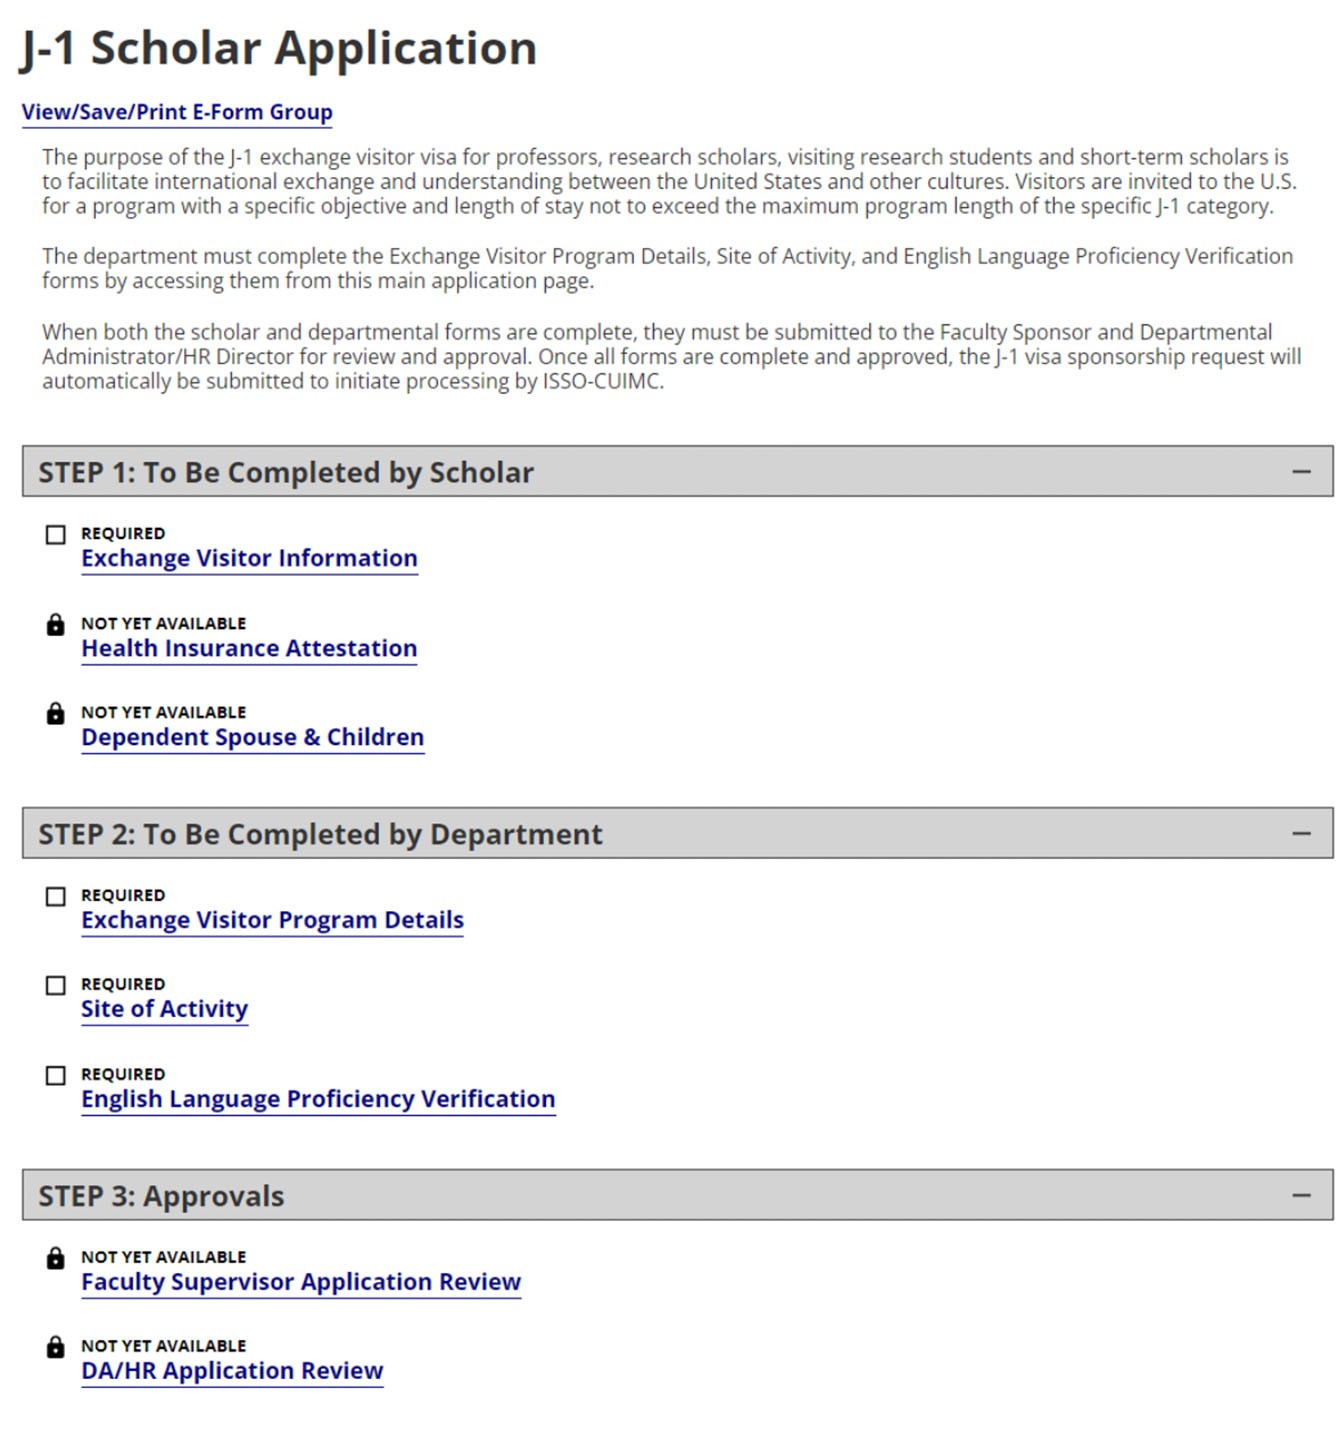 Image of J-1 Scholar Application screen.